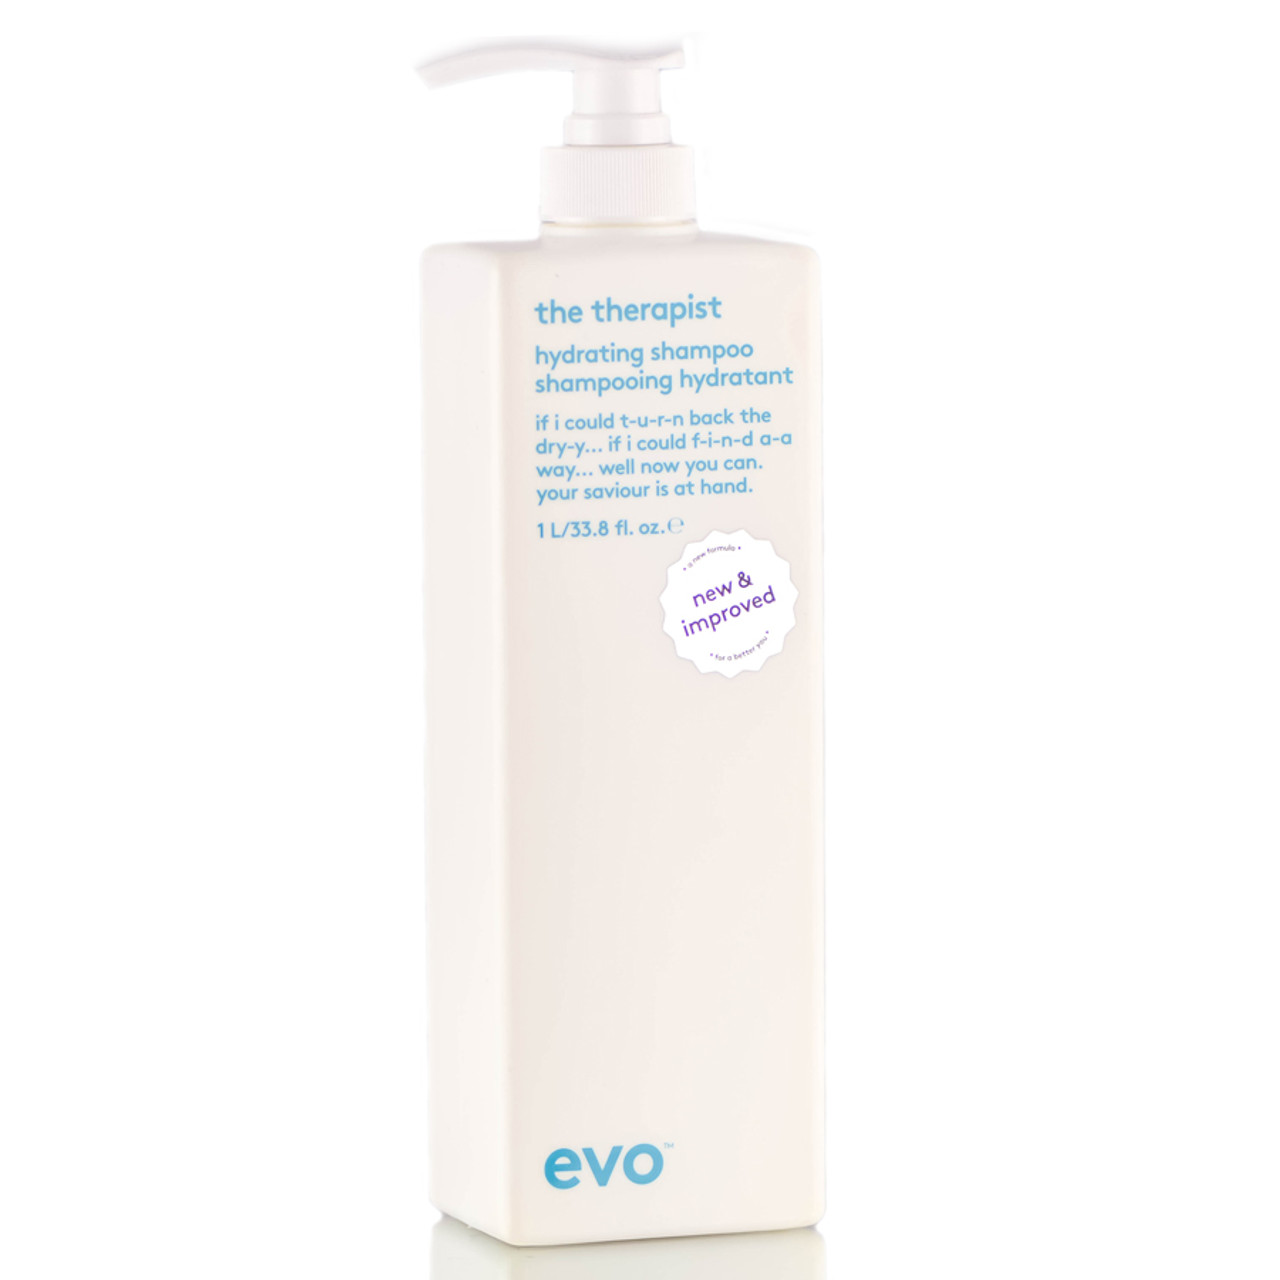 Evo The Therapist Shampoo SleekShop.com